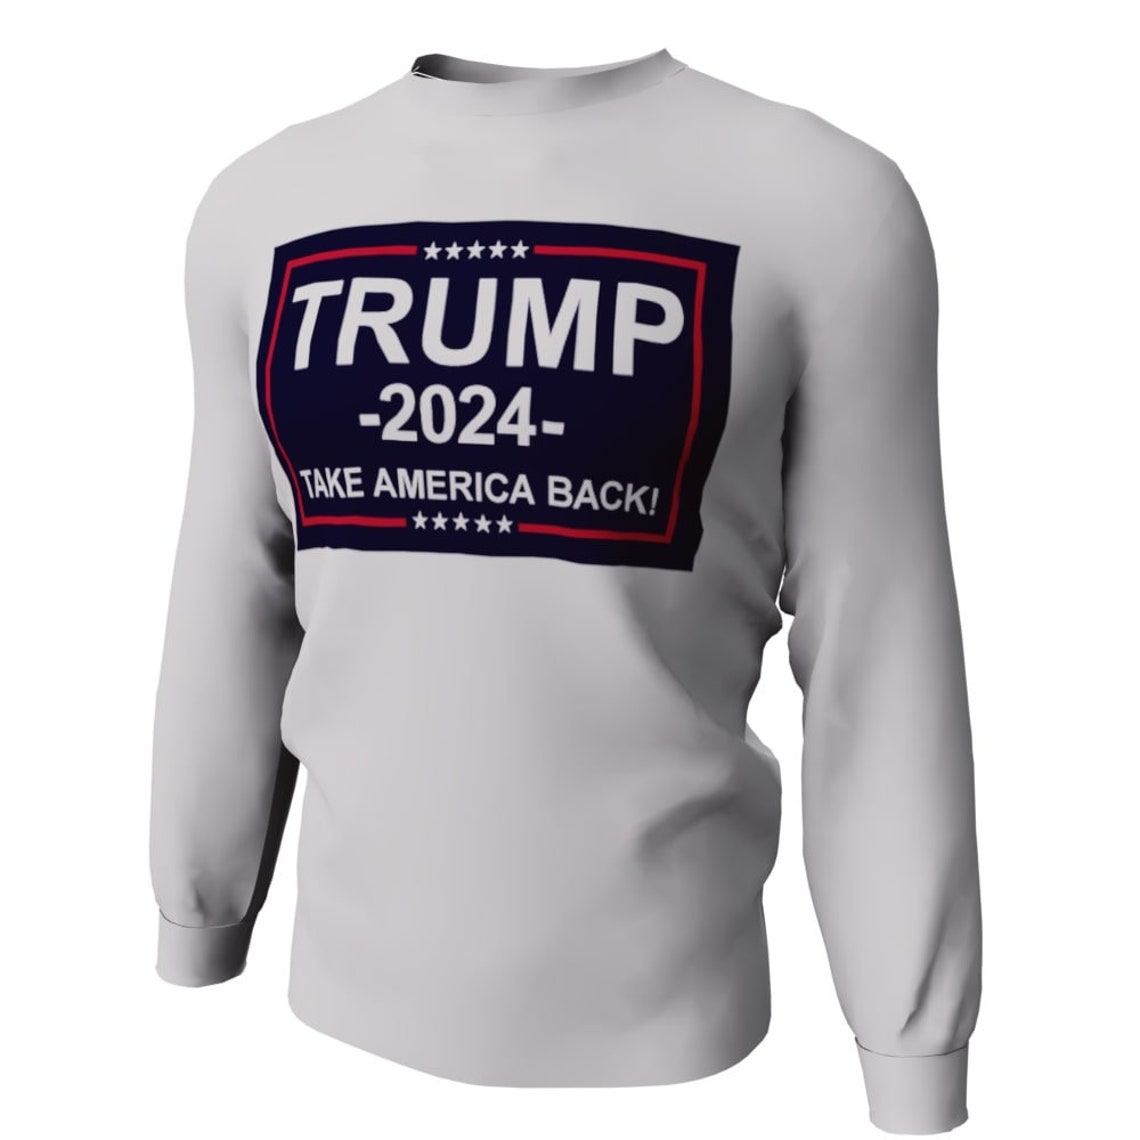 Trump 2024 Long Sleeve Shirt Trump 2024 Tshirt Donald Trump Tshirt